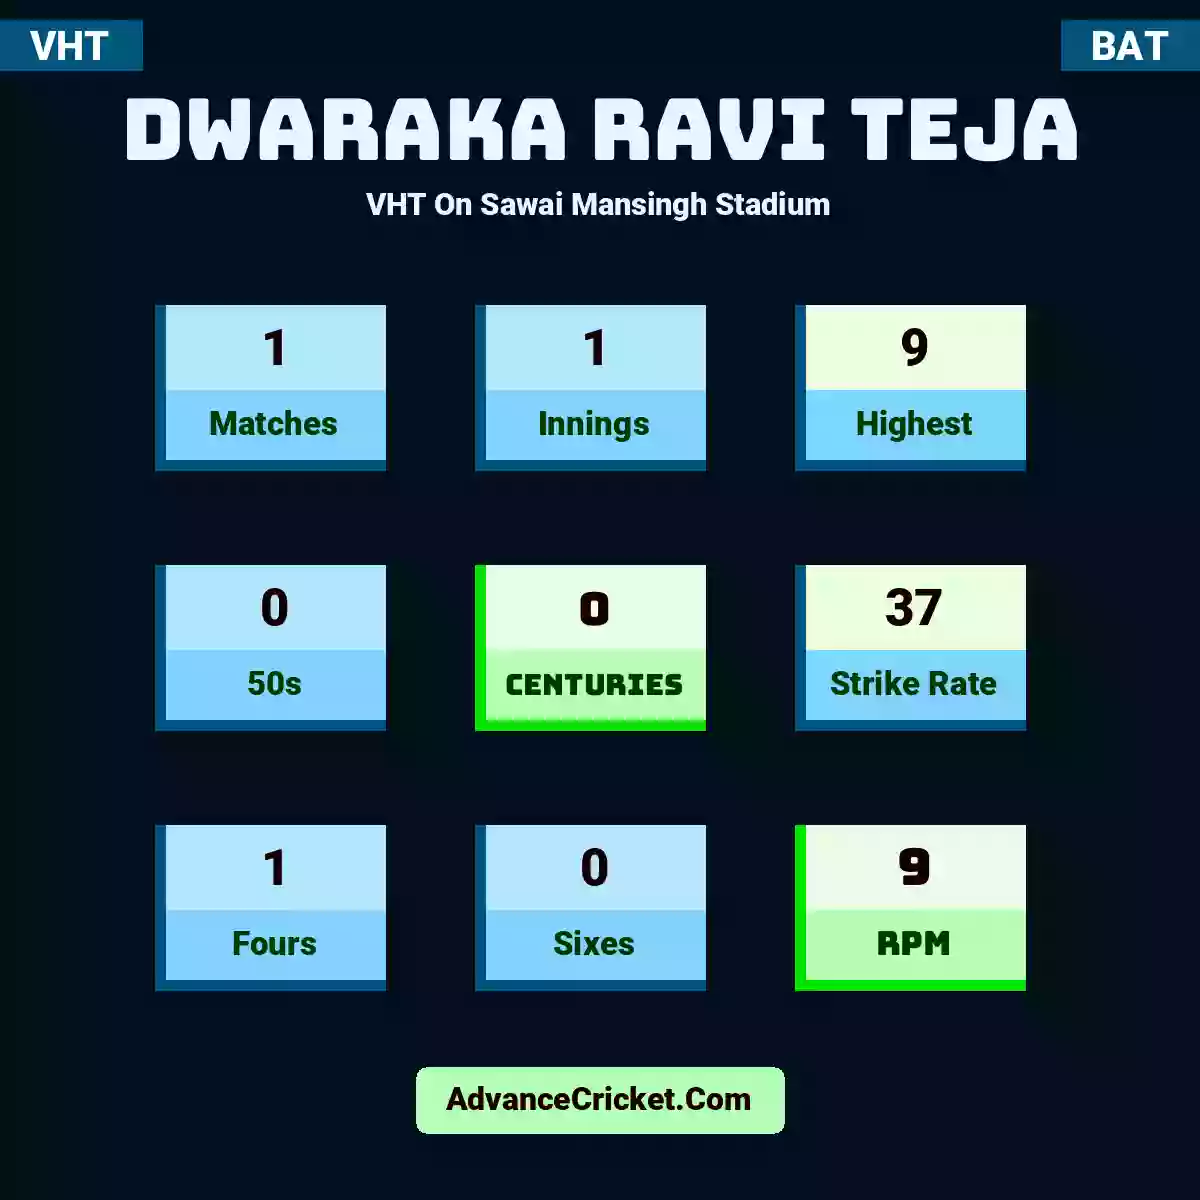 Dwaraka Ravi Teja VHT  On Sawai Mansingh Stadium, Dwaraka Ravi Teja played 1 matches, scored 9 runs as highest, 0 half-centuries, and 0 centuries, with a strike rate of 37. D.Teja hit 1 fours and 0 sixes, with an RPM of 9.